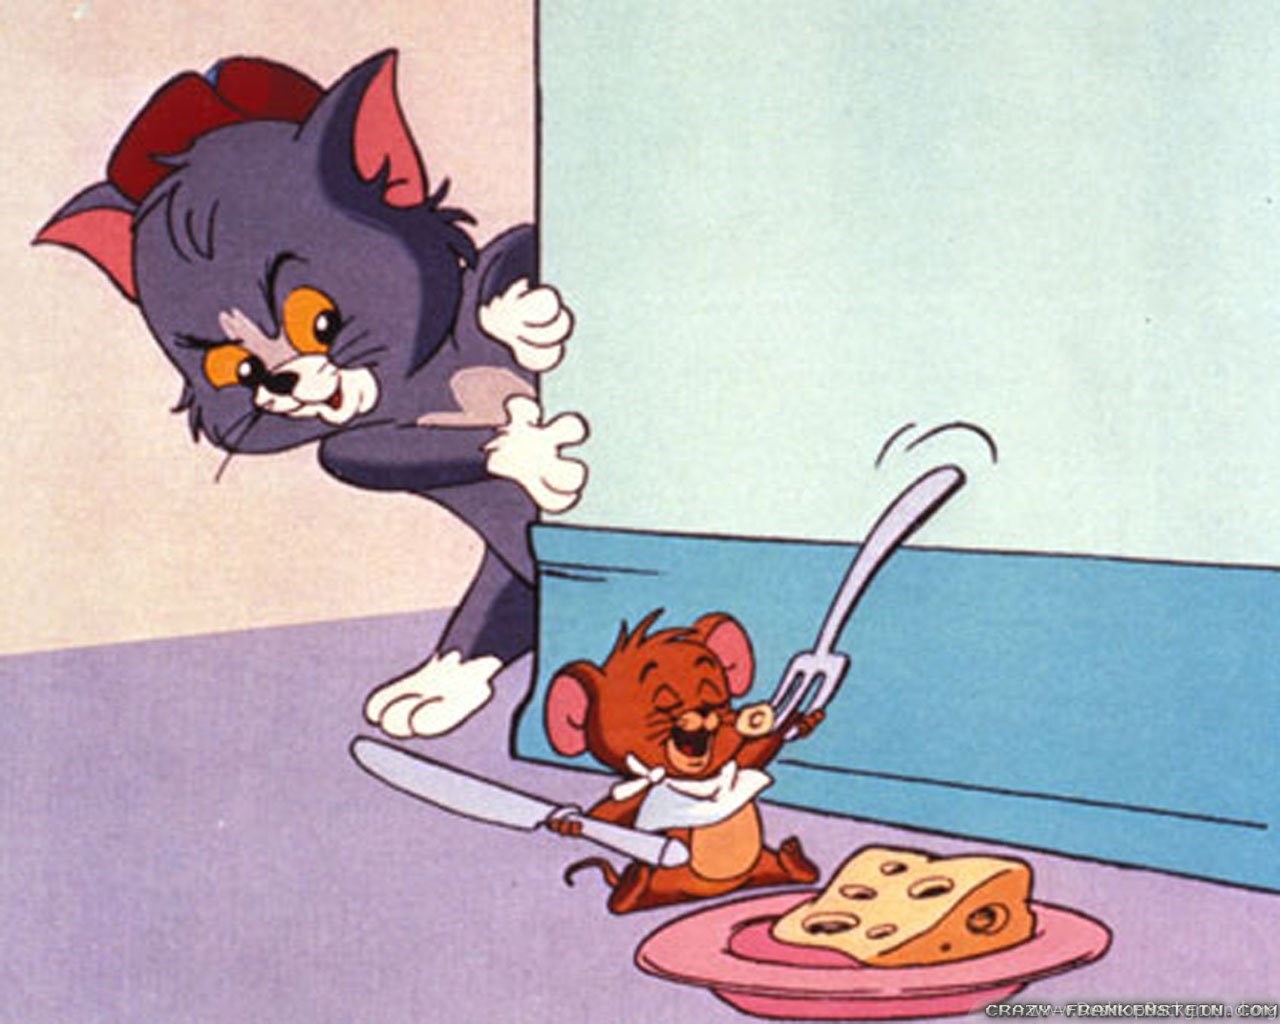 Как том и джерри ругались мирились. Том и Джерри 1990. Том и Джерри том 1963. Том и Джерри в детстве. Tom and Jerry 1960.